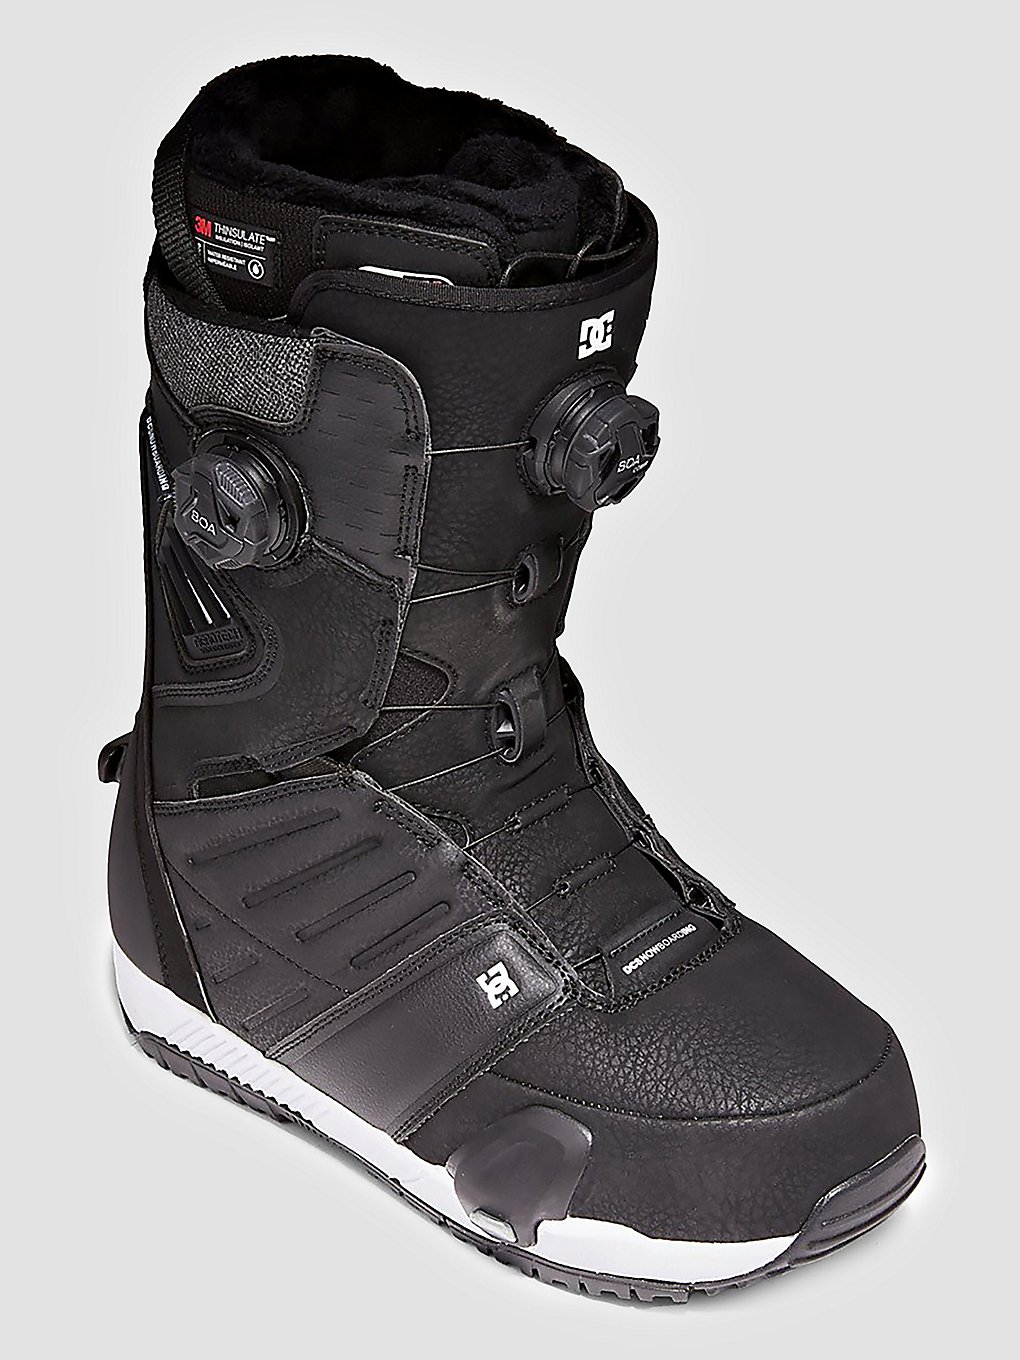 dc judge step on 2022 snowboard boots black